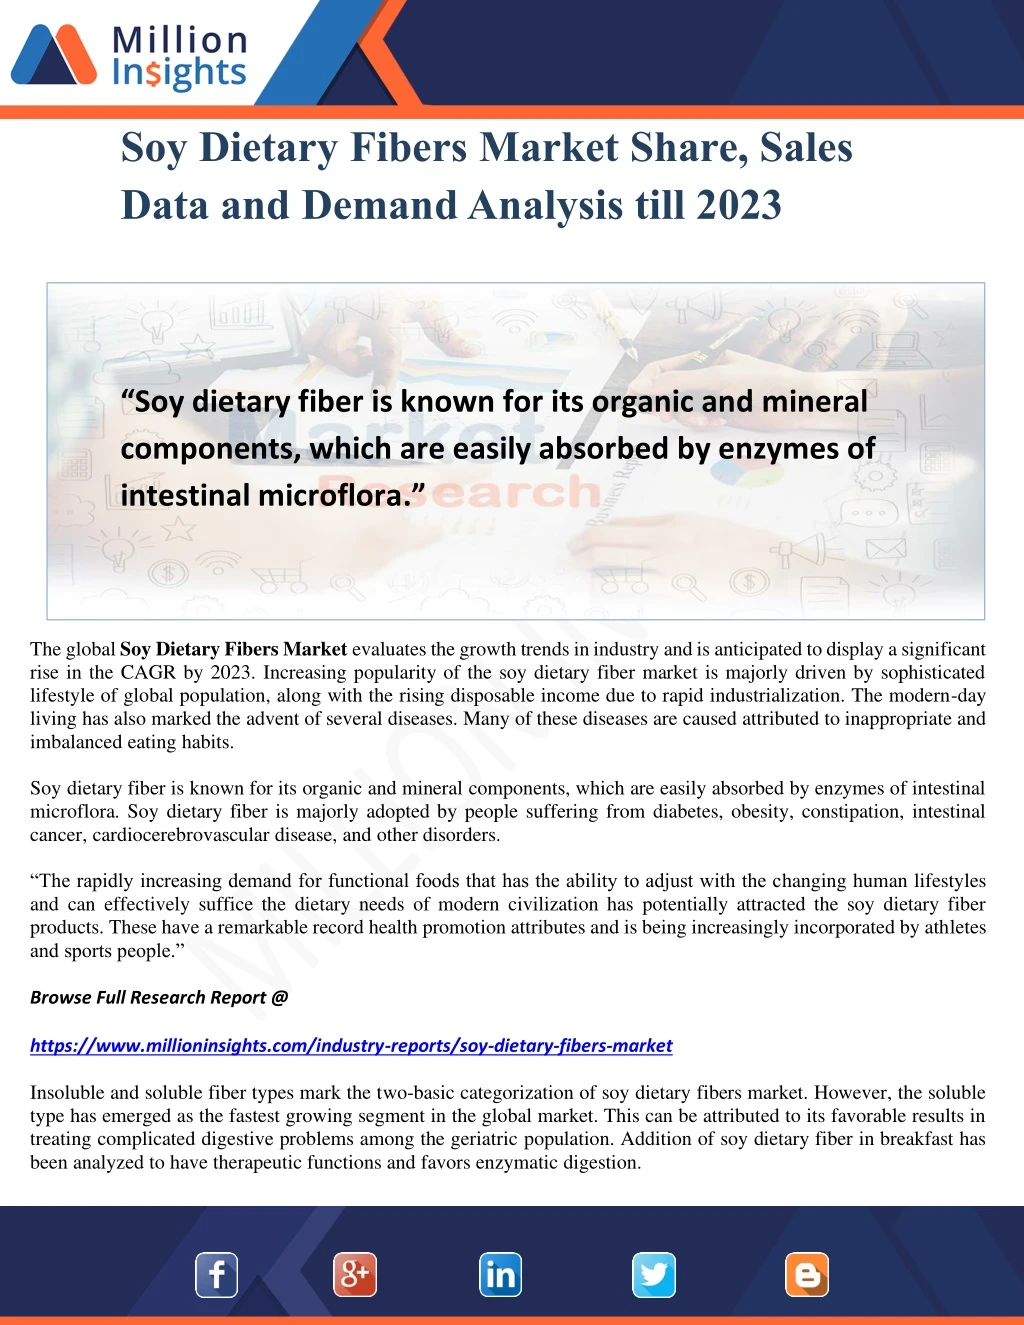 soy dietary fibers market share sales data